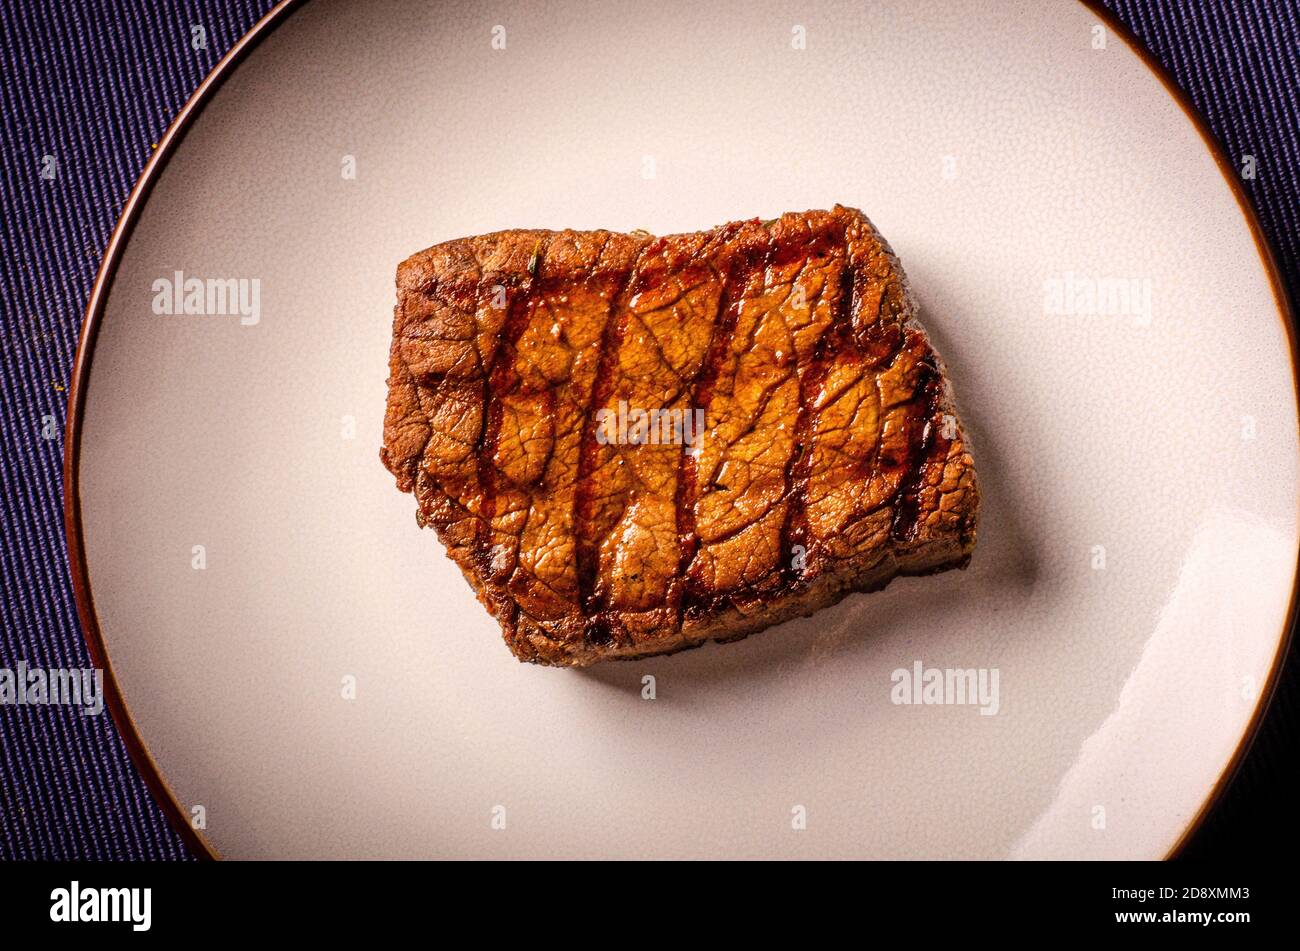 Steak grillé du barbecue avec des grillemarks Banque D'Images